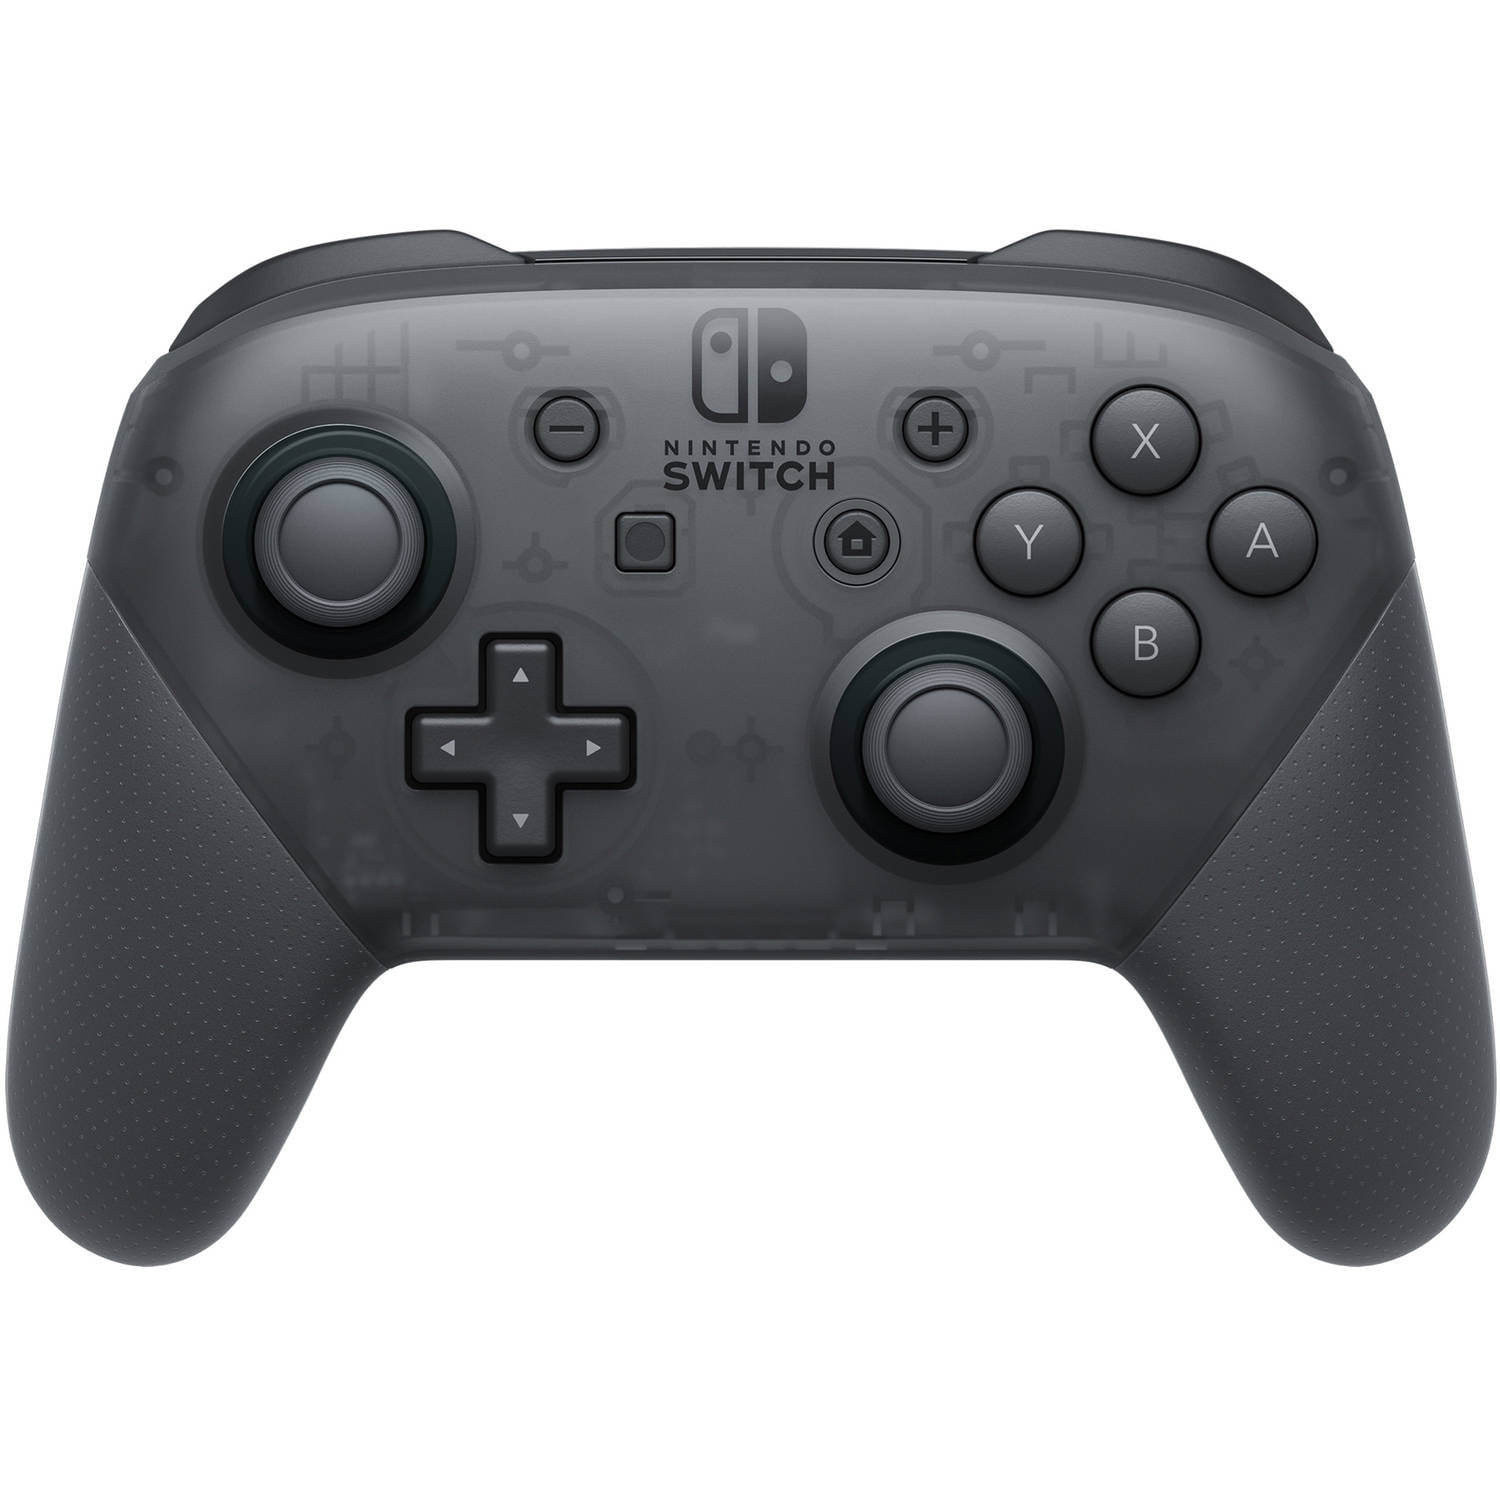 Nintendo Switch - Walmart.com